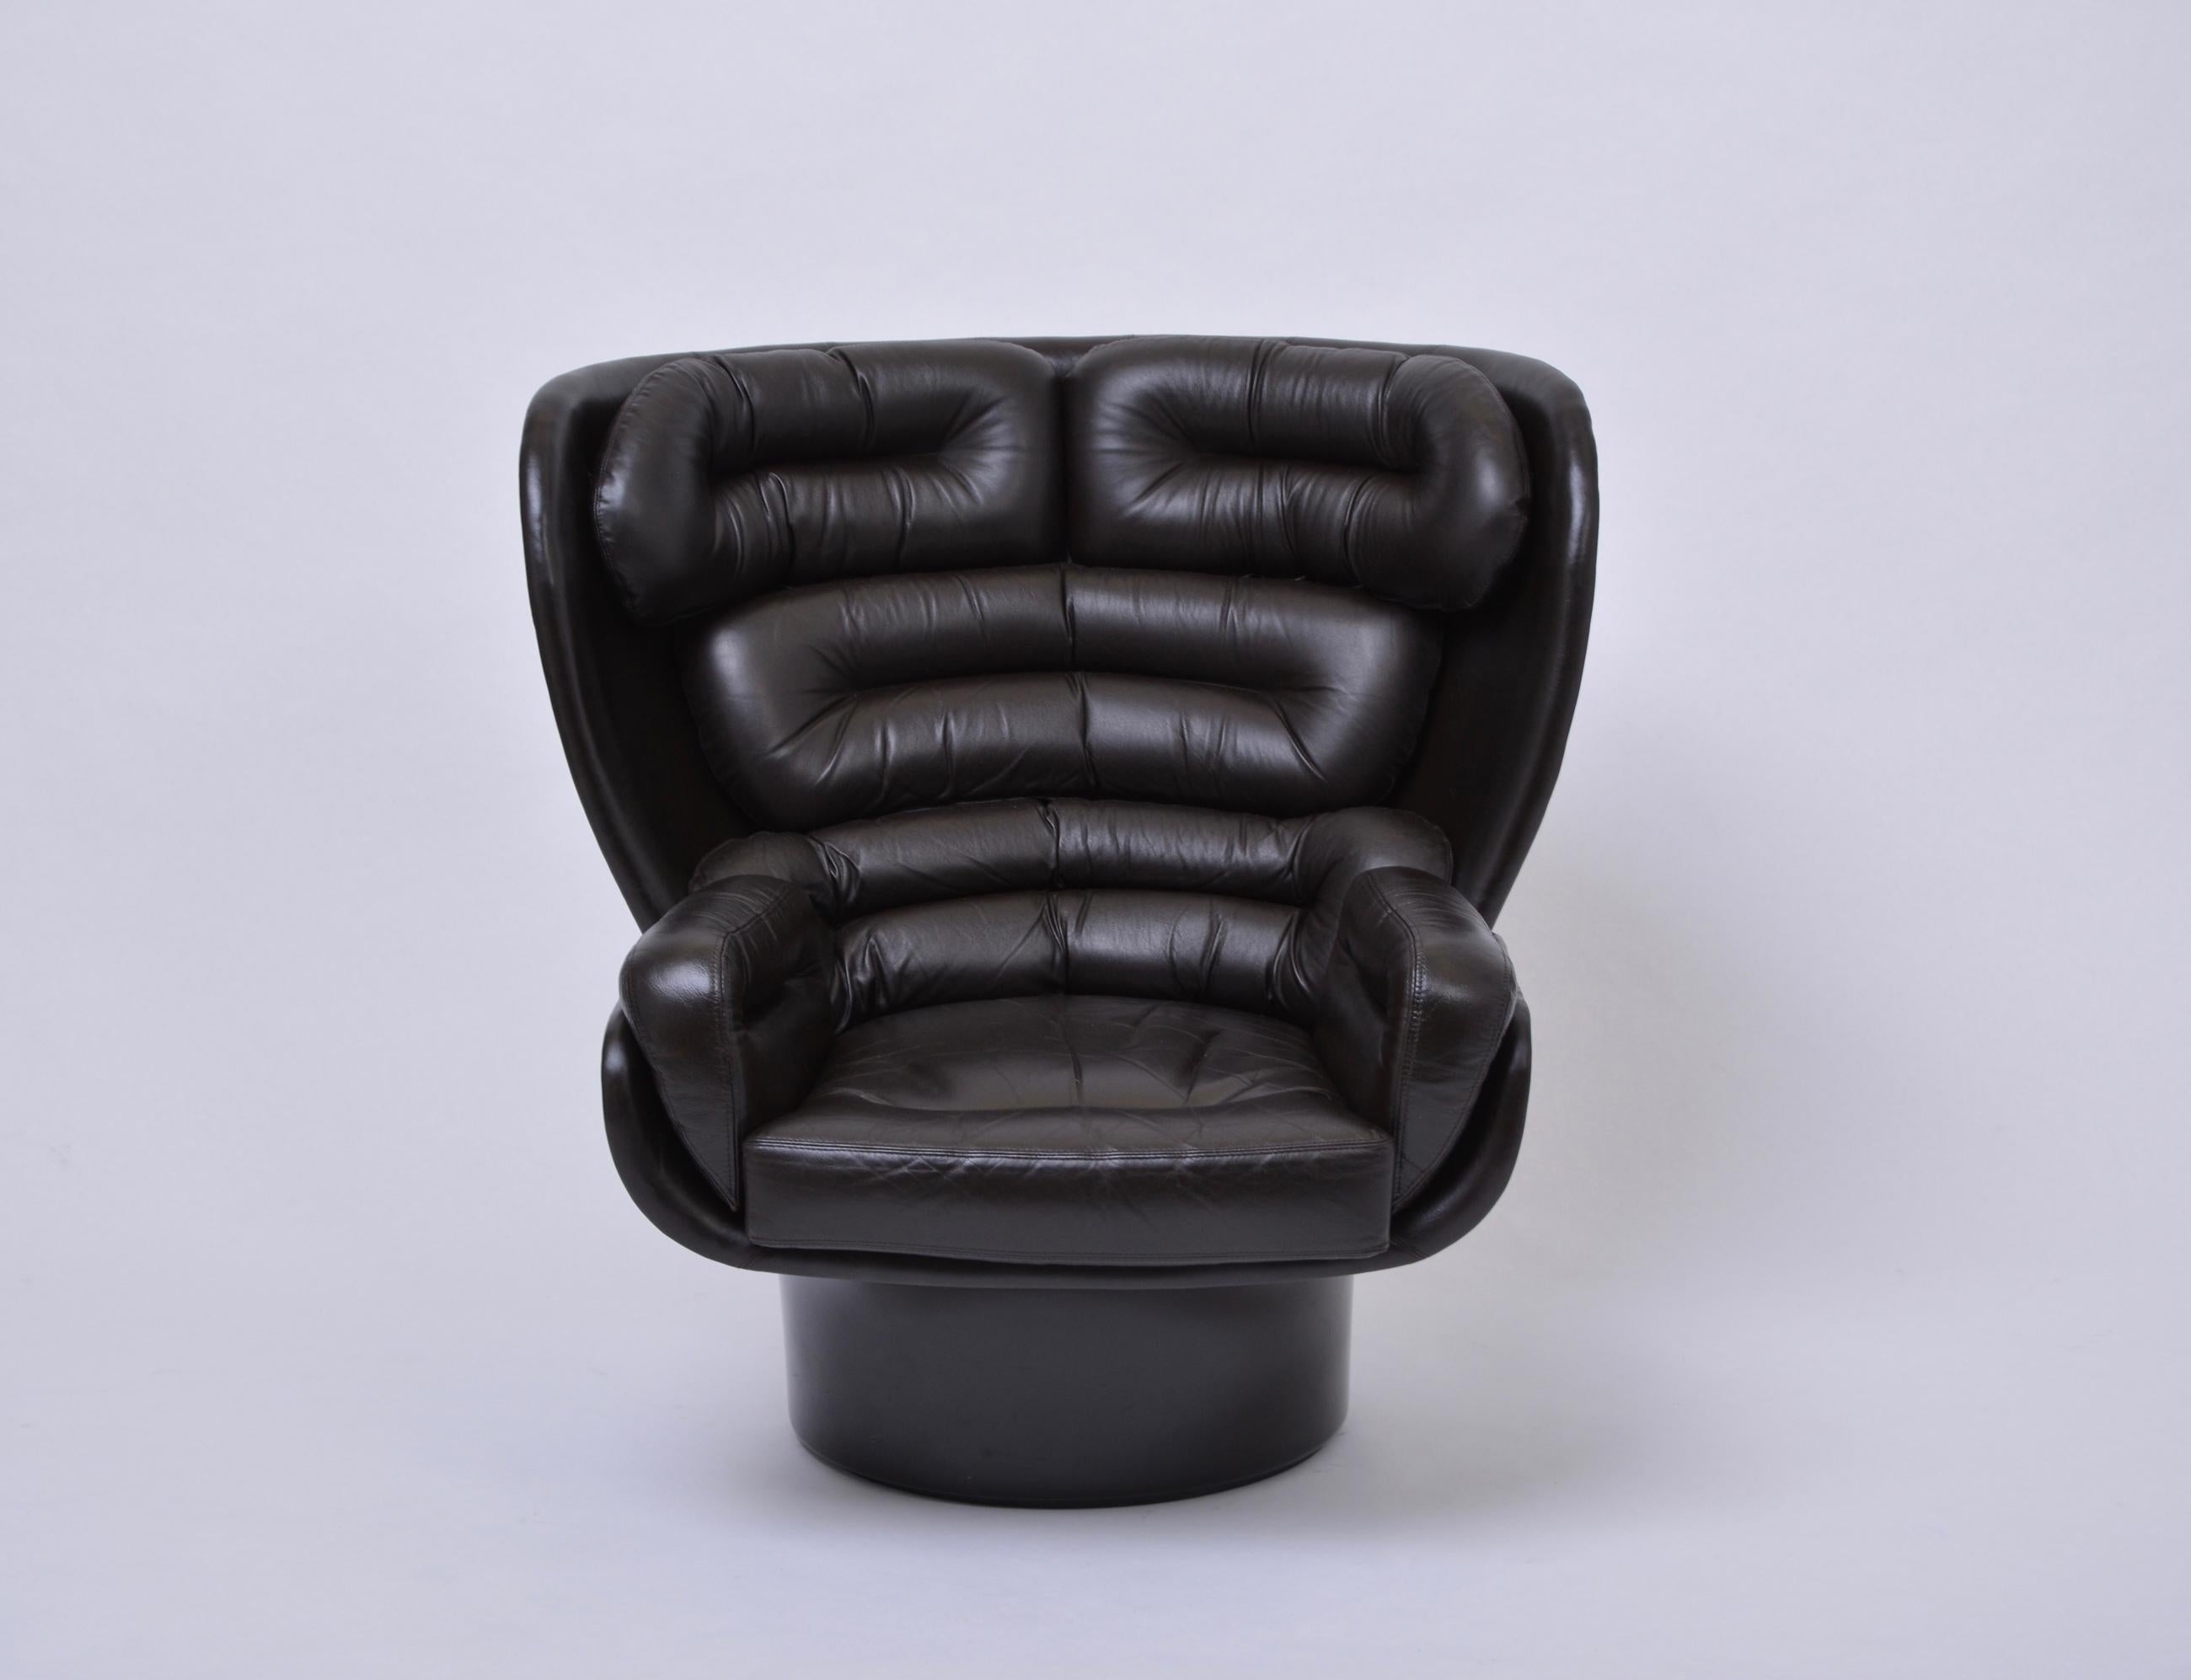 Mid-Century Modern Dark Brown Elda Chair by Joe Colombo for Comfort, 1963
The 